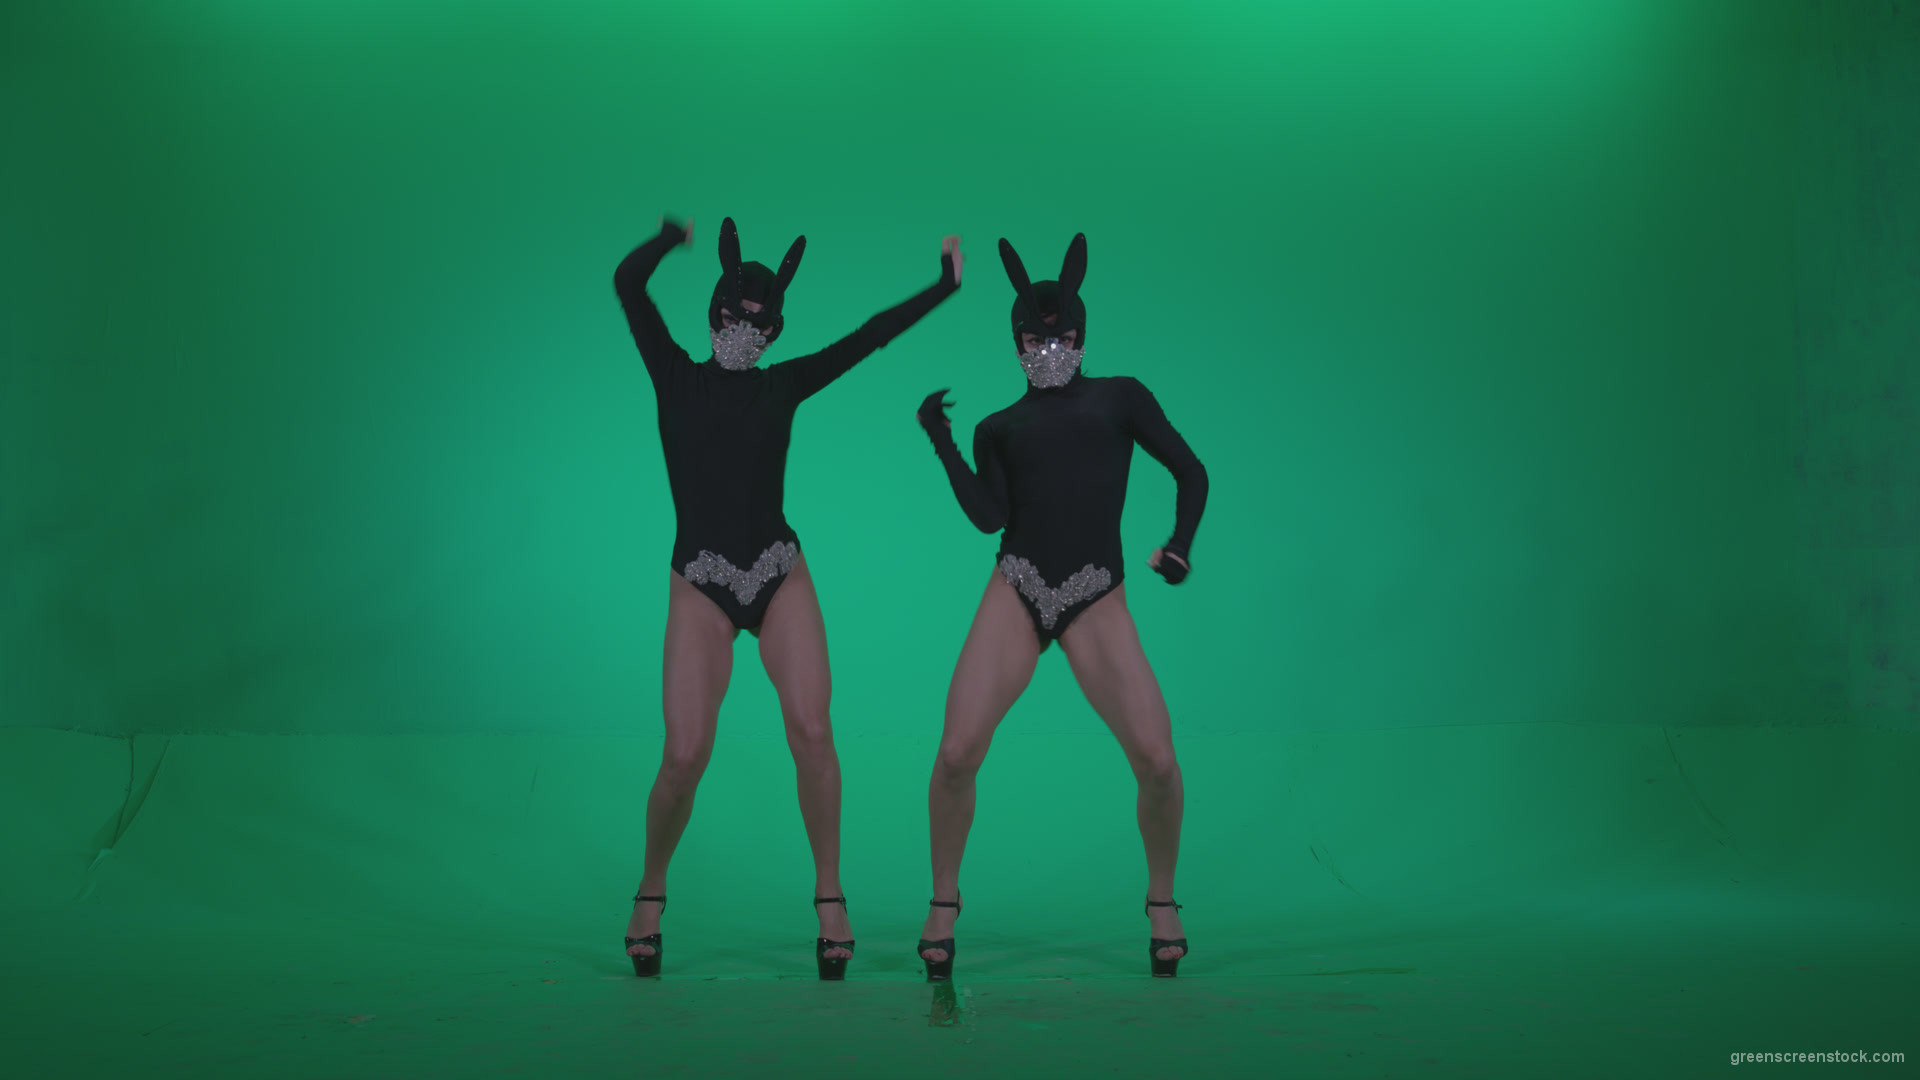 Go-go-Dancer-Black-Rabbit-u1-Green-Screen-Video-Footage_002 Green Screen Stock